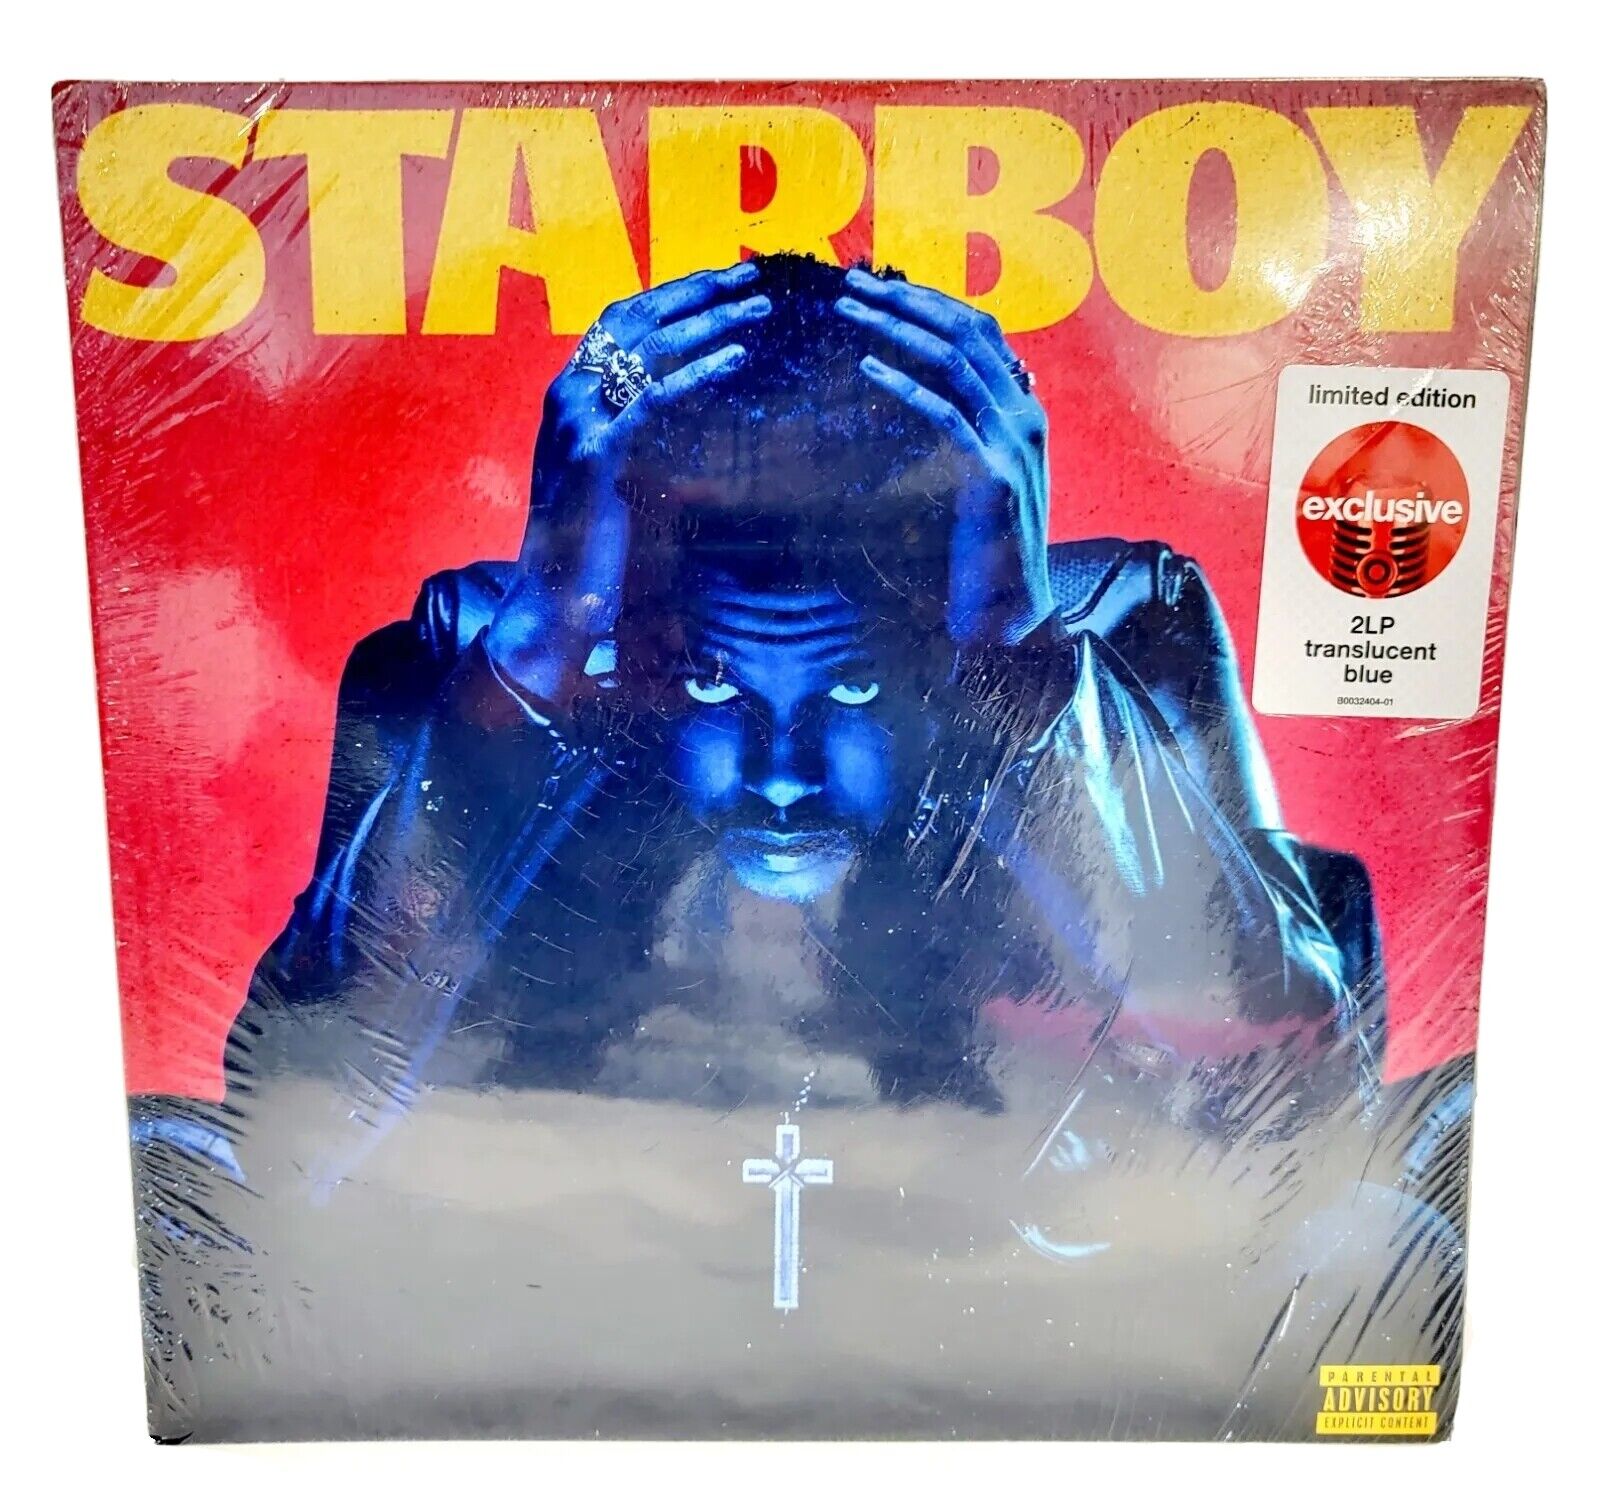 Starboy (2LP) The Weeknd (Weekend) Exclusive Blue Vinyl (New) Read Description 